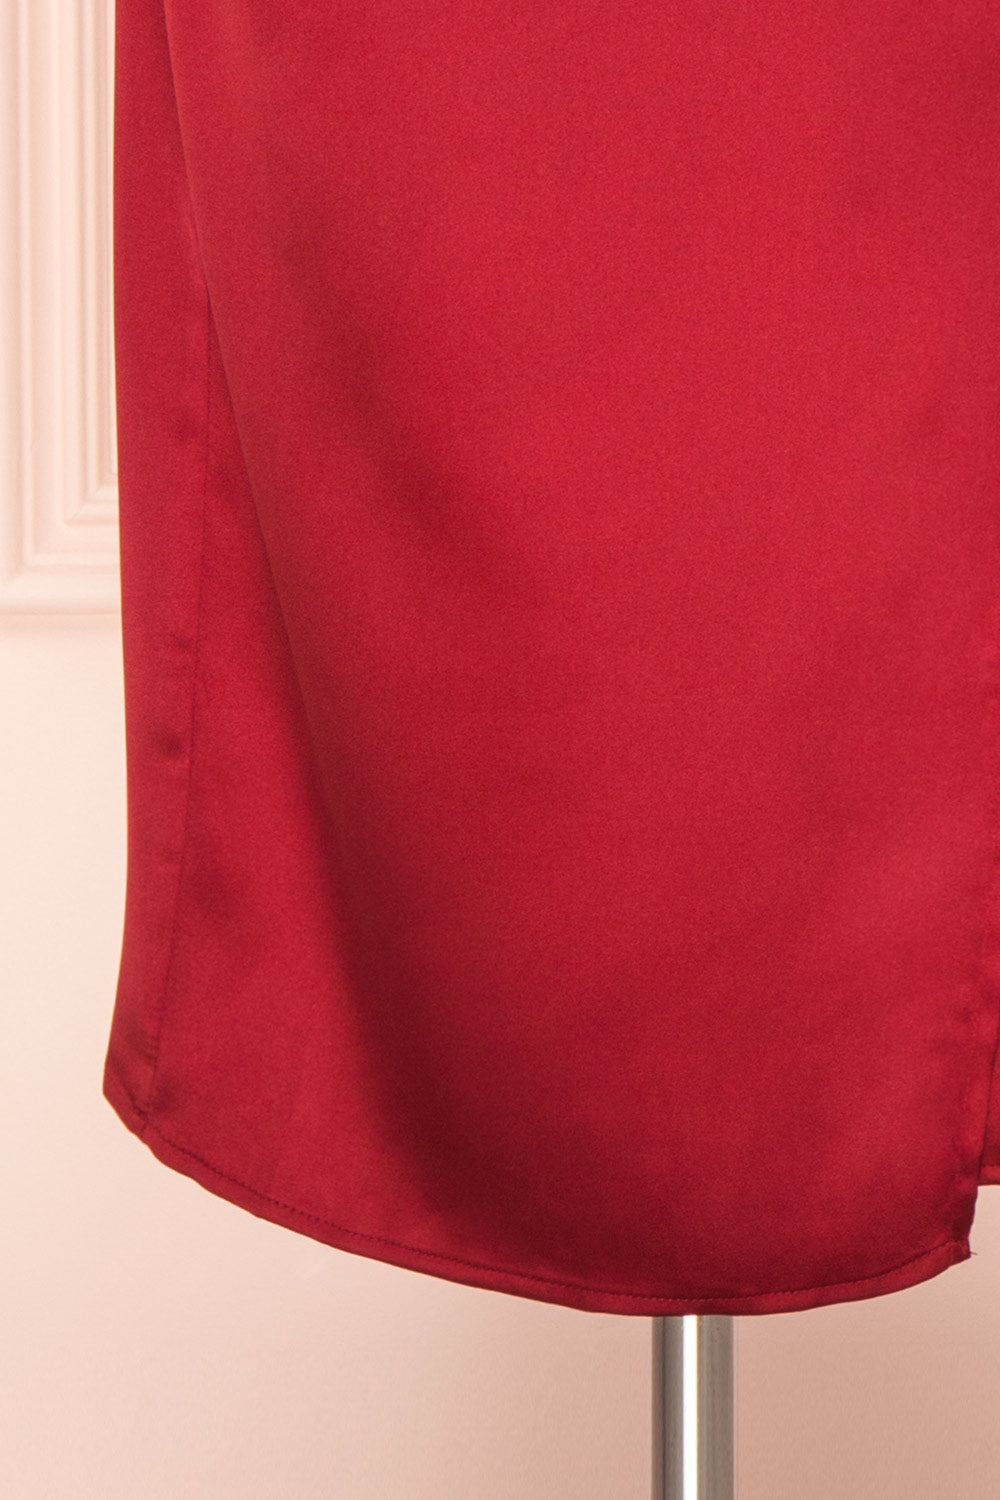 Chloe Wine Red Silky Midi Slip Dress | Boutique 1861 bottom 